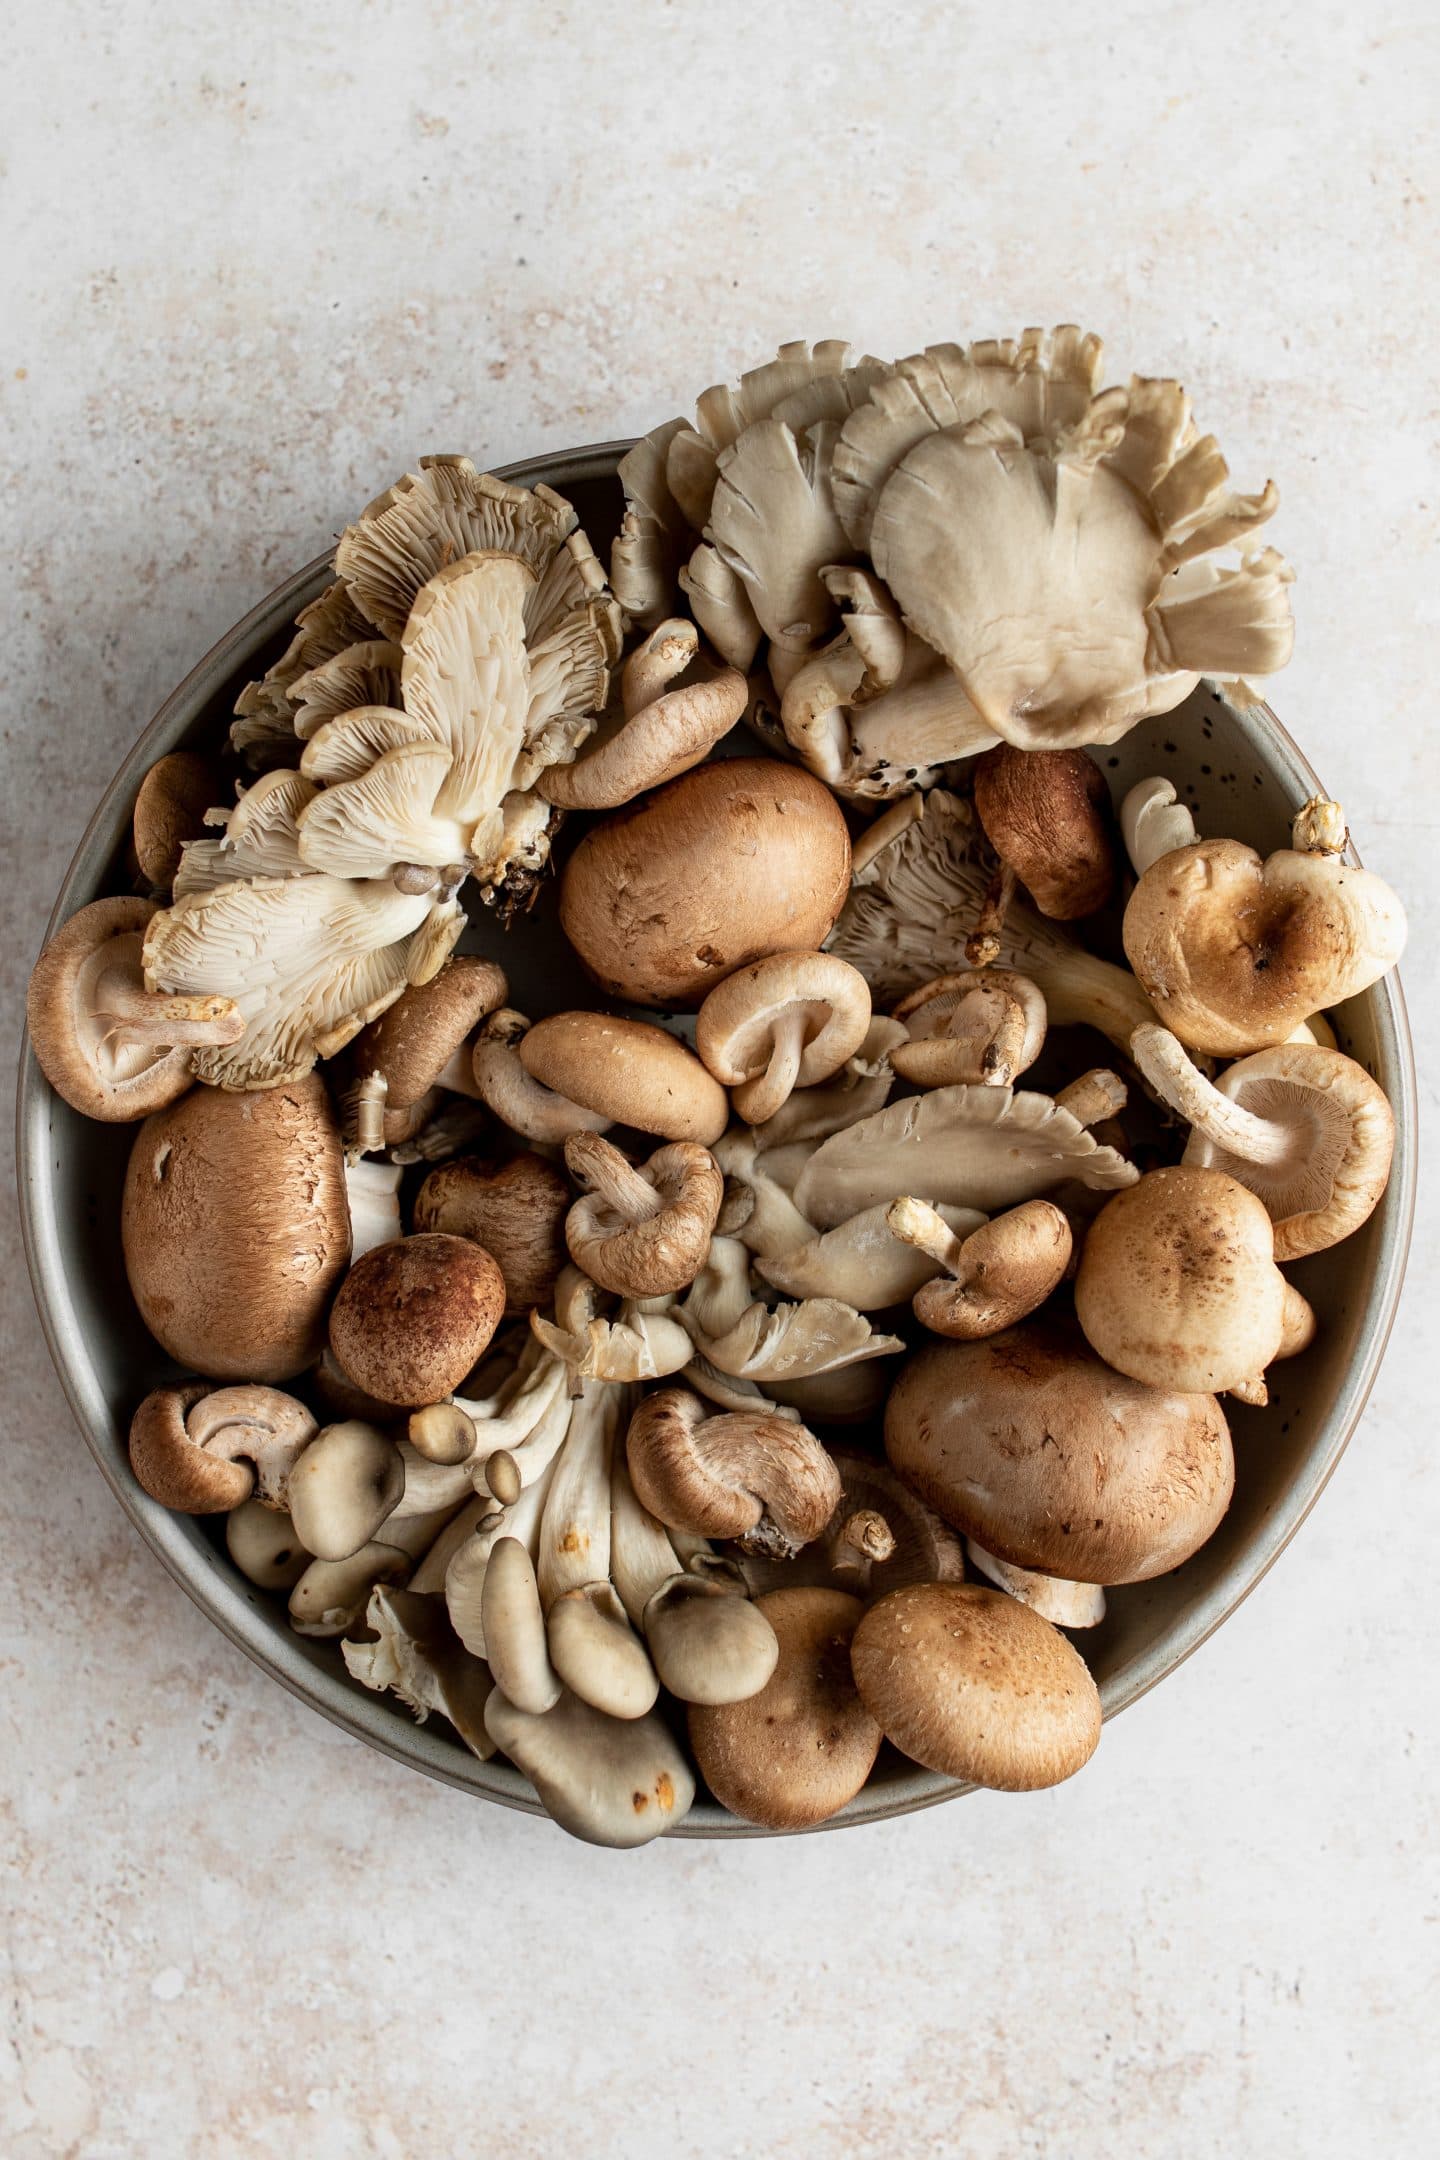 cremini, oyster, and shiitake mushrooms